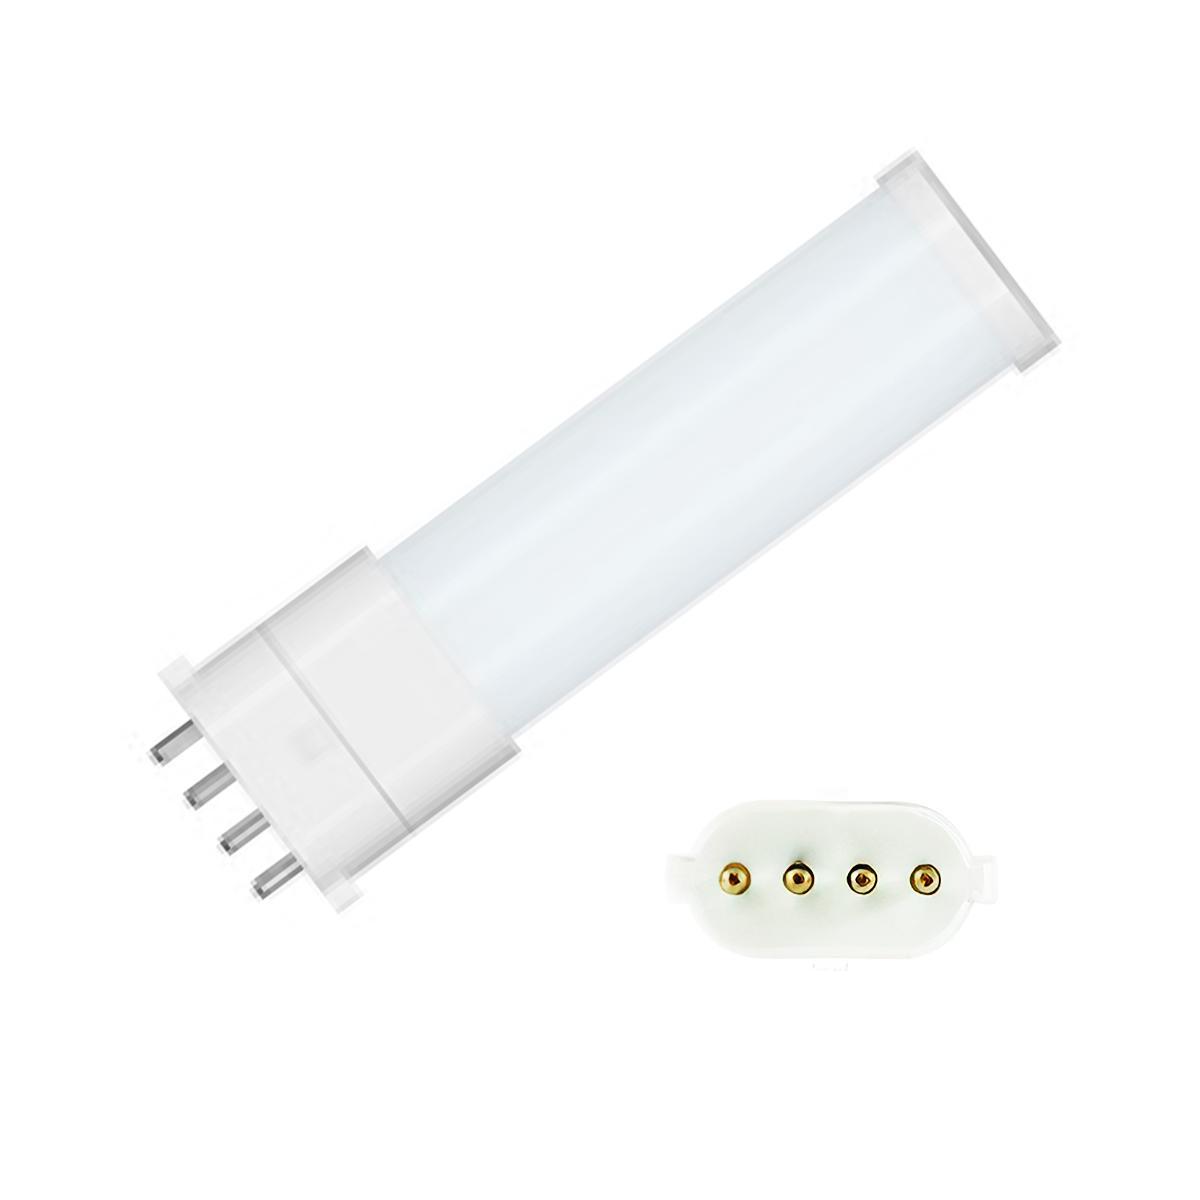 4 Pin PLL LED Bulb, 3.5 Watt 330 Lumens, 2700K, Horizontal, Replaces 9W CFL, 2G7 Base, Type B Ballast Bypass - Bees Lighting